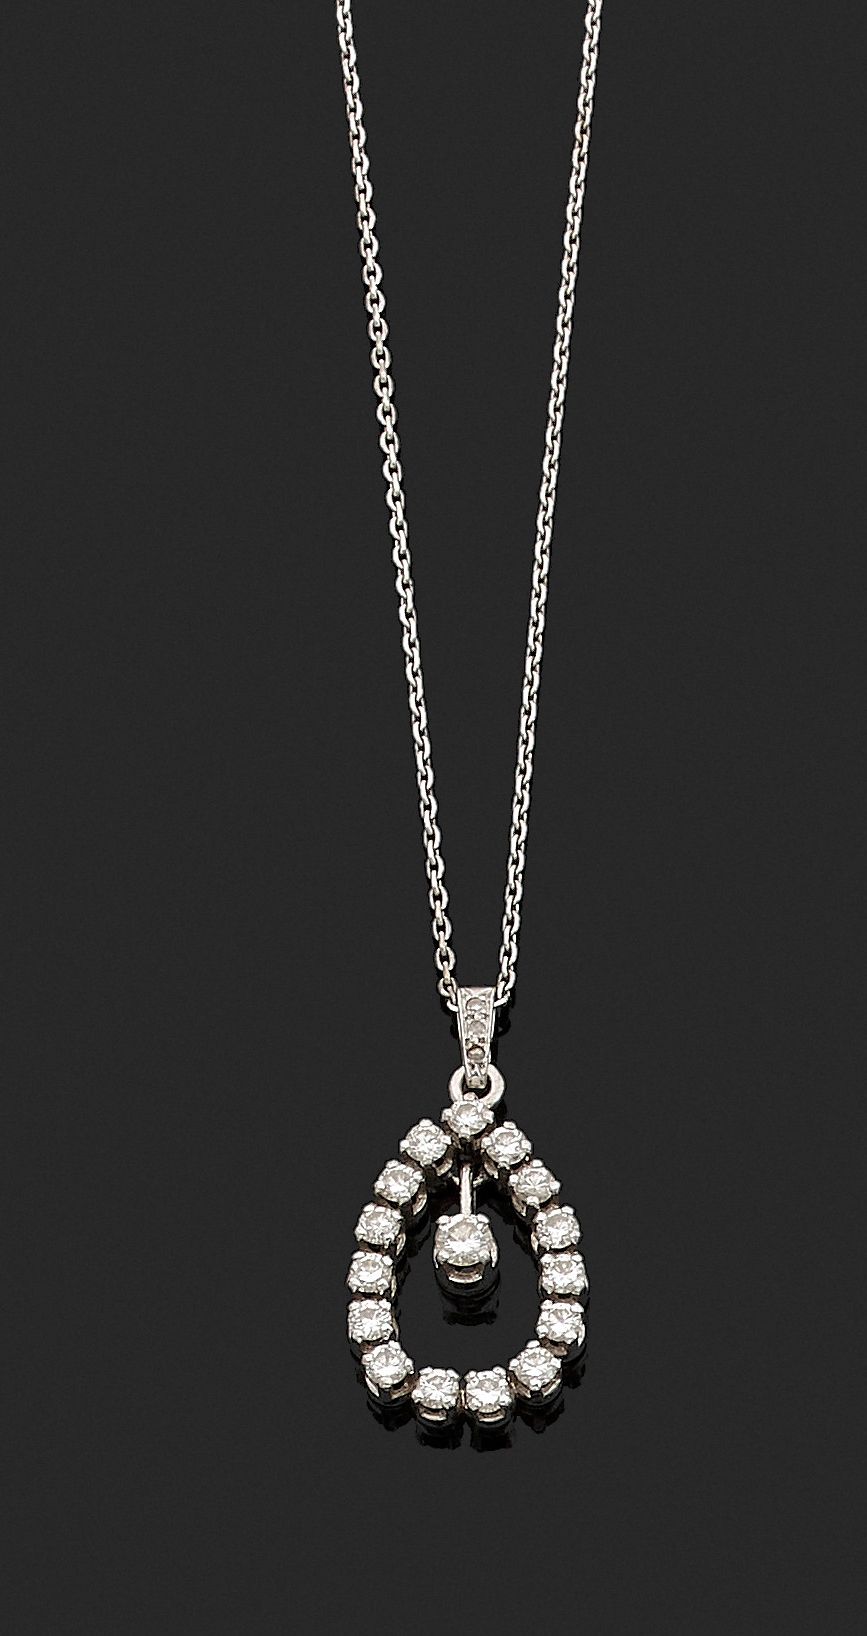 Null 镶嵌钻石的白金吊坠，手持一颗较大的钻石作为吊坠，其白金链。毛重3.67克 长38.5厘米 高33毫米